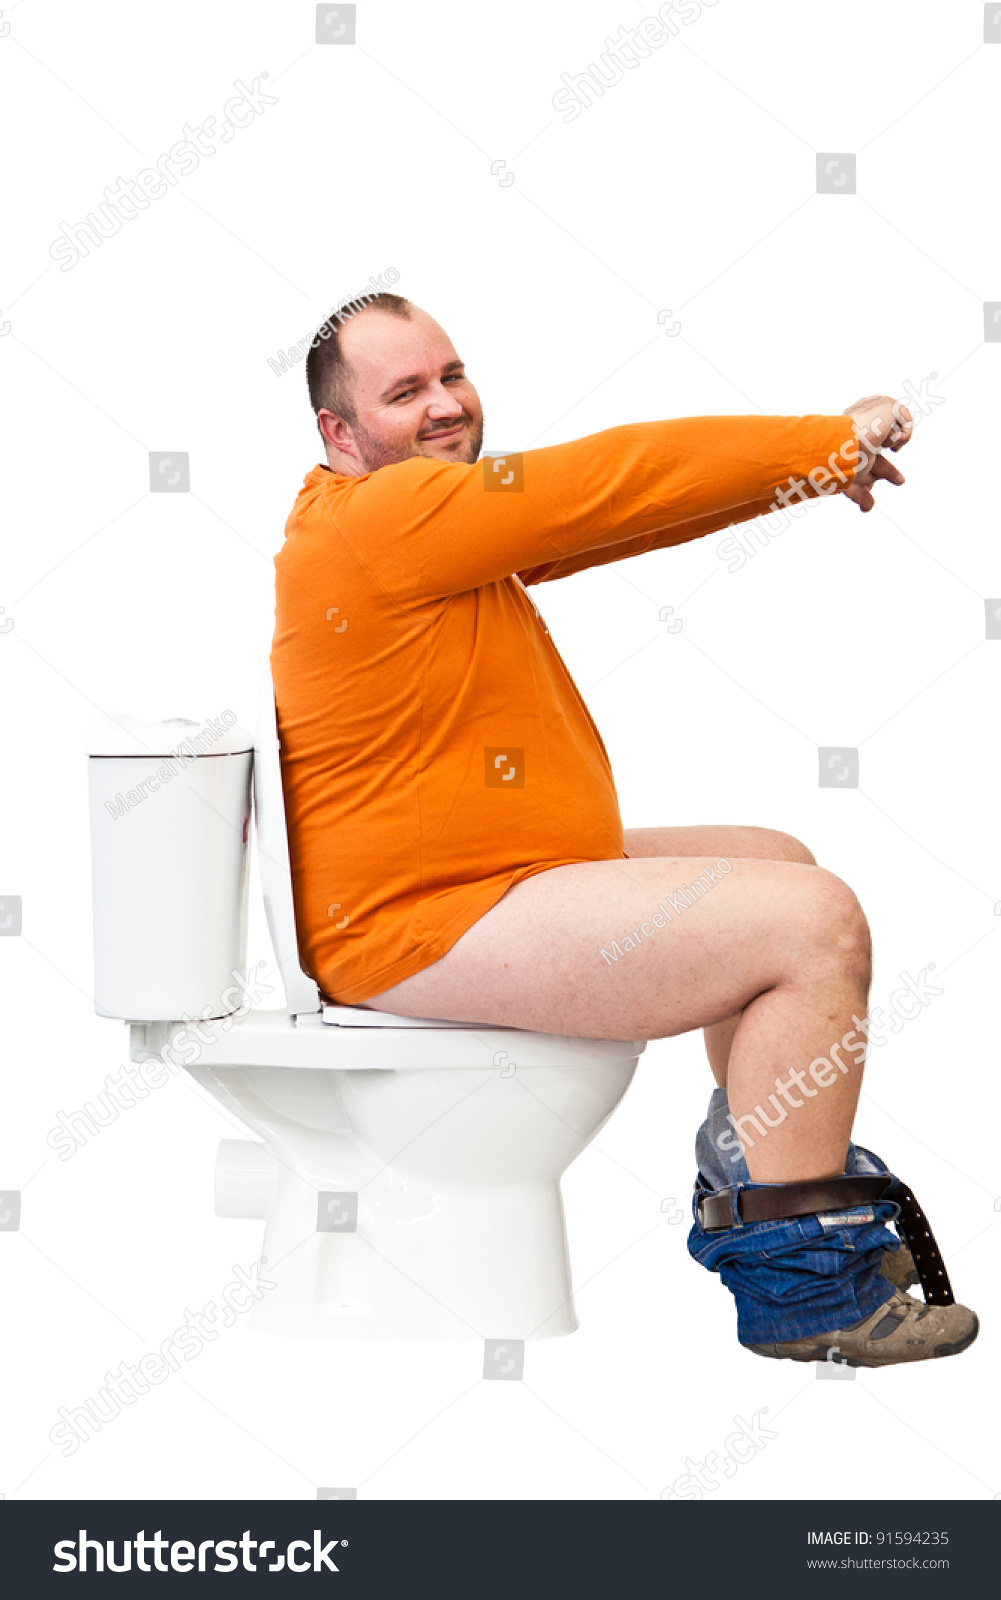 clipart sitting on toilet - photo #48